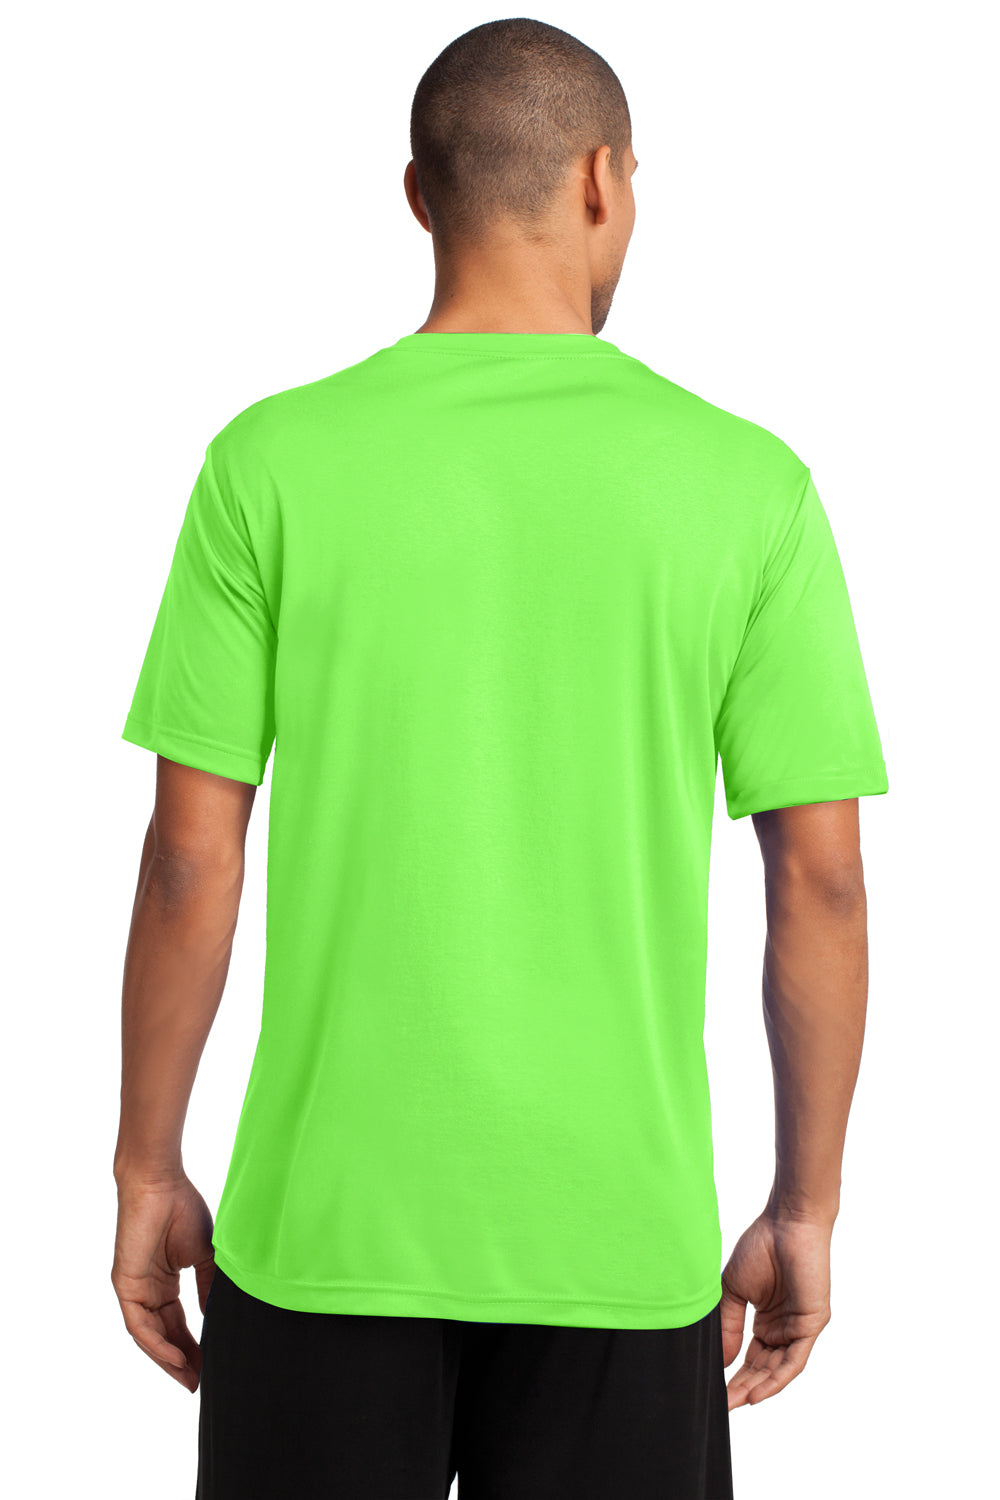 Port & Company PC380 Mens Dry Zone Performance Moisture Wicking Short Sleeve Crewneck T-Shirt Neon Green Back